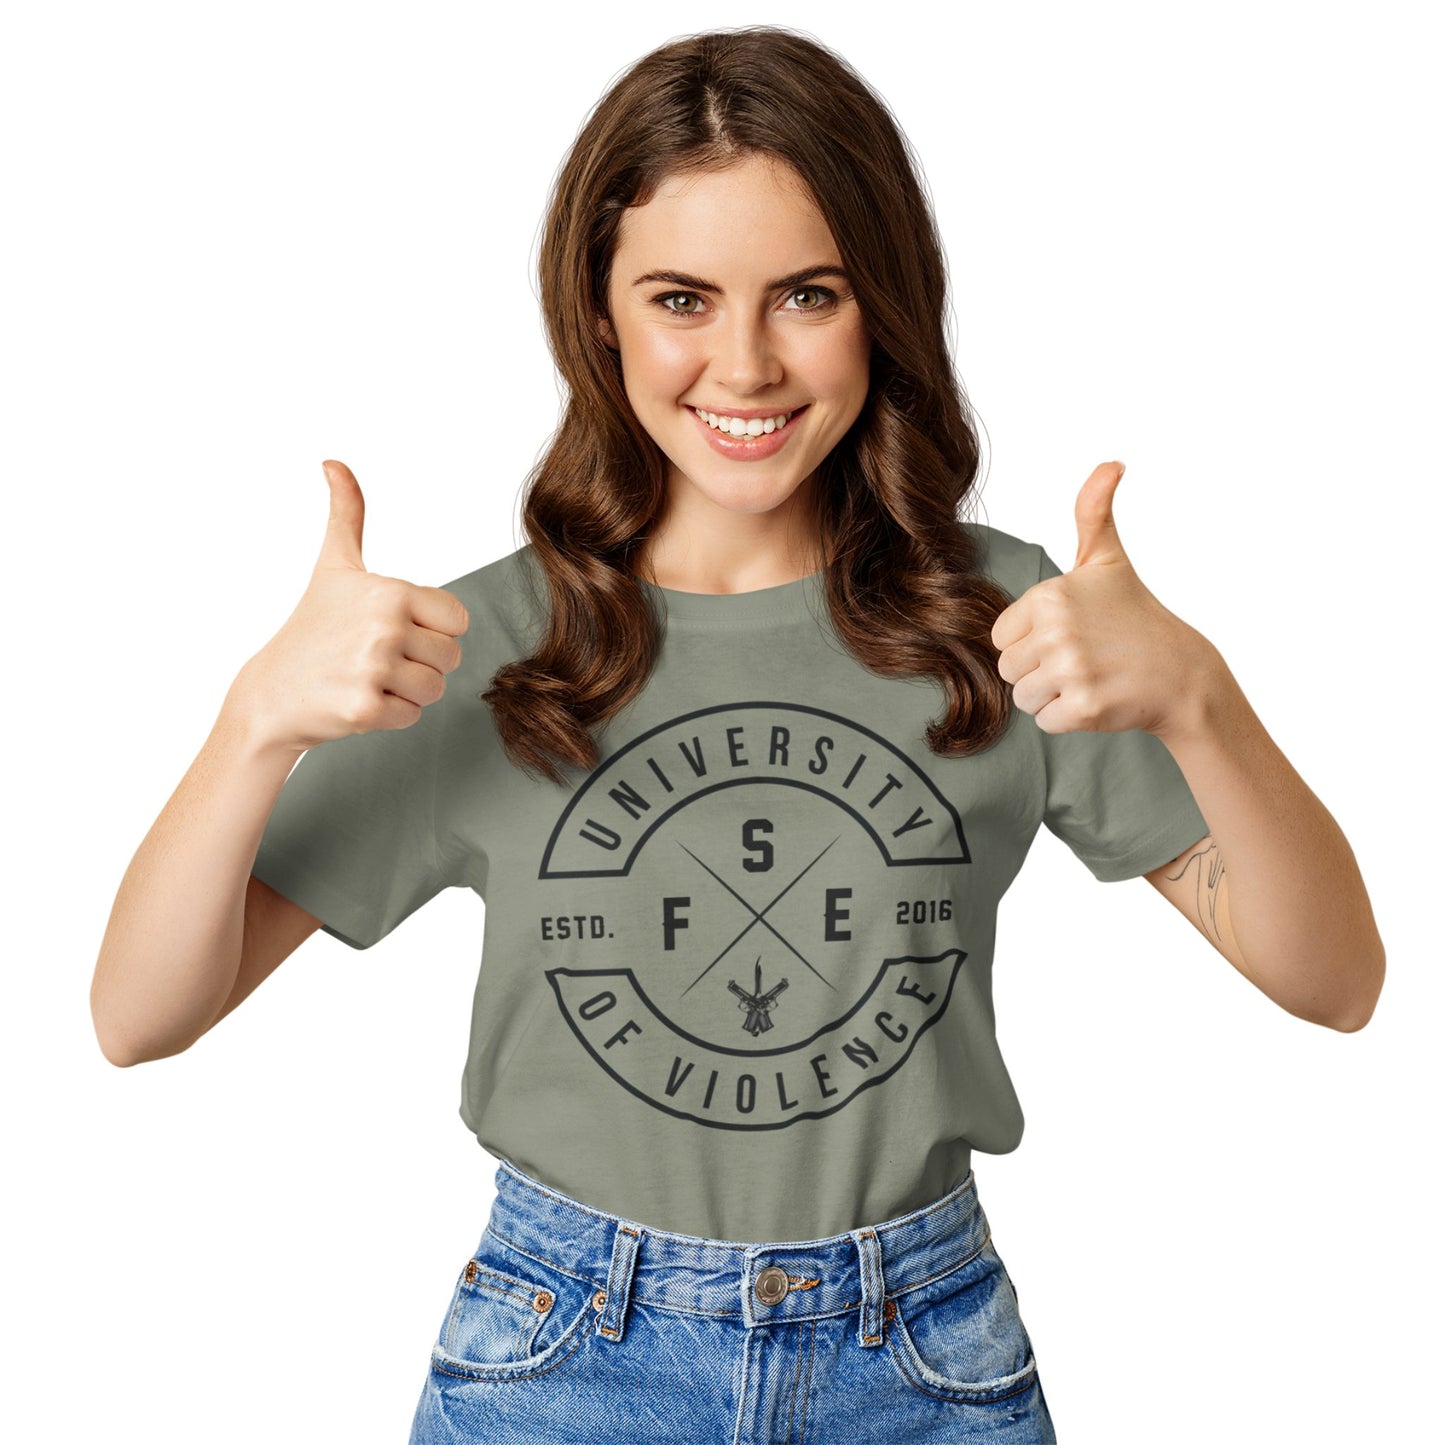 University of Violence Tee – Unisex Heather Military Green Shirt - Las Vegas Combat Academy